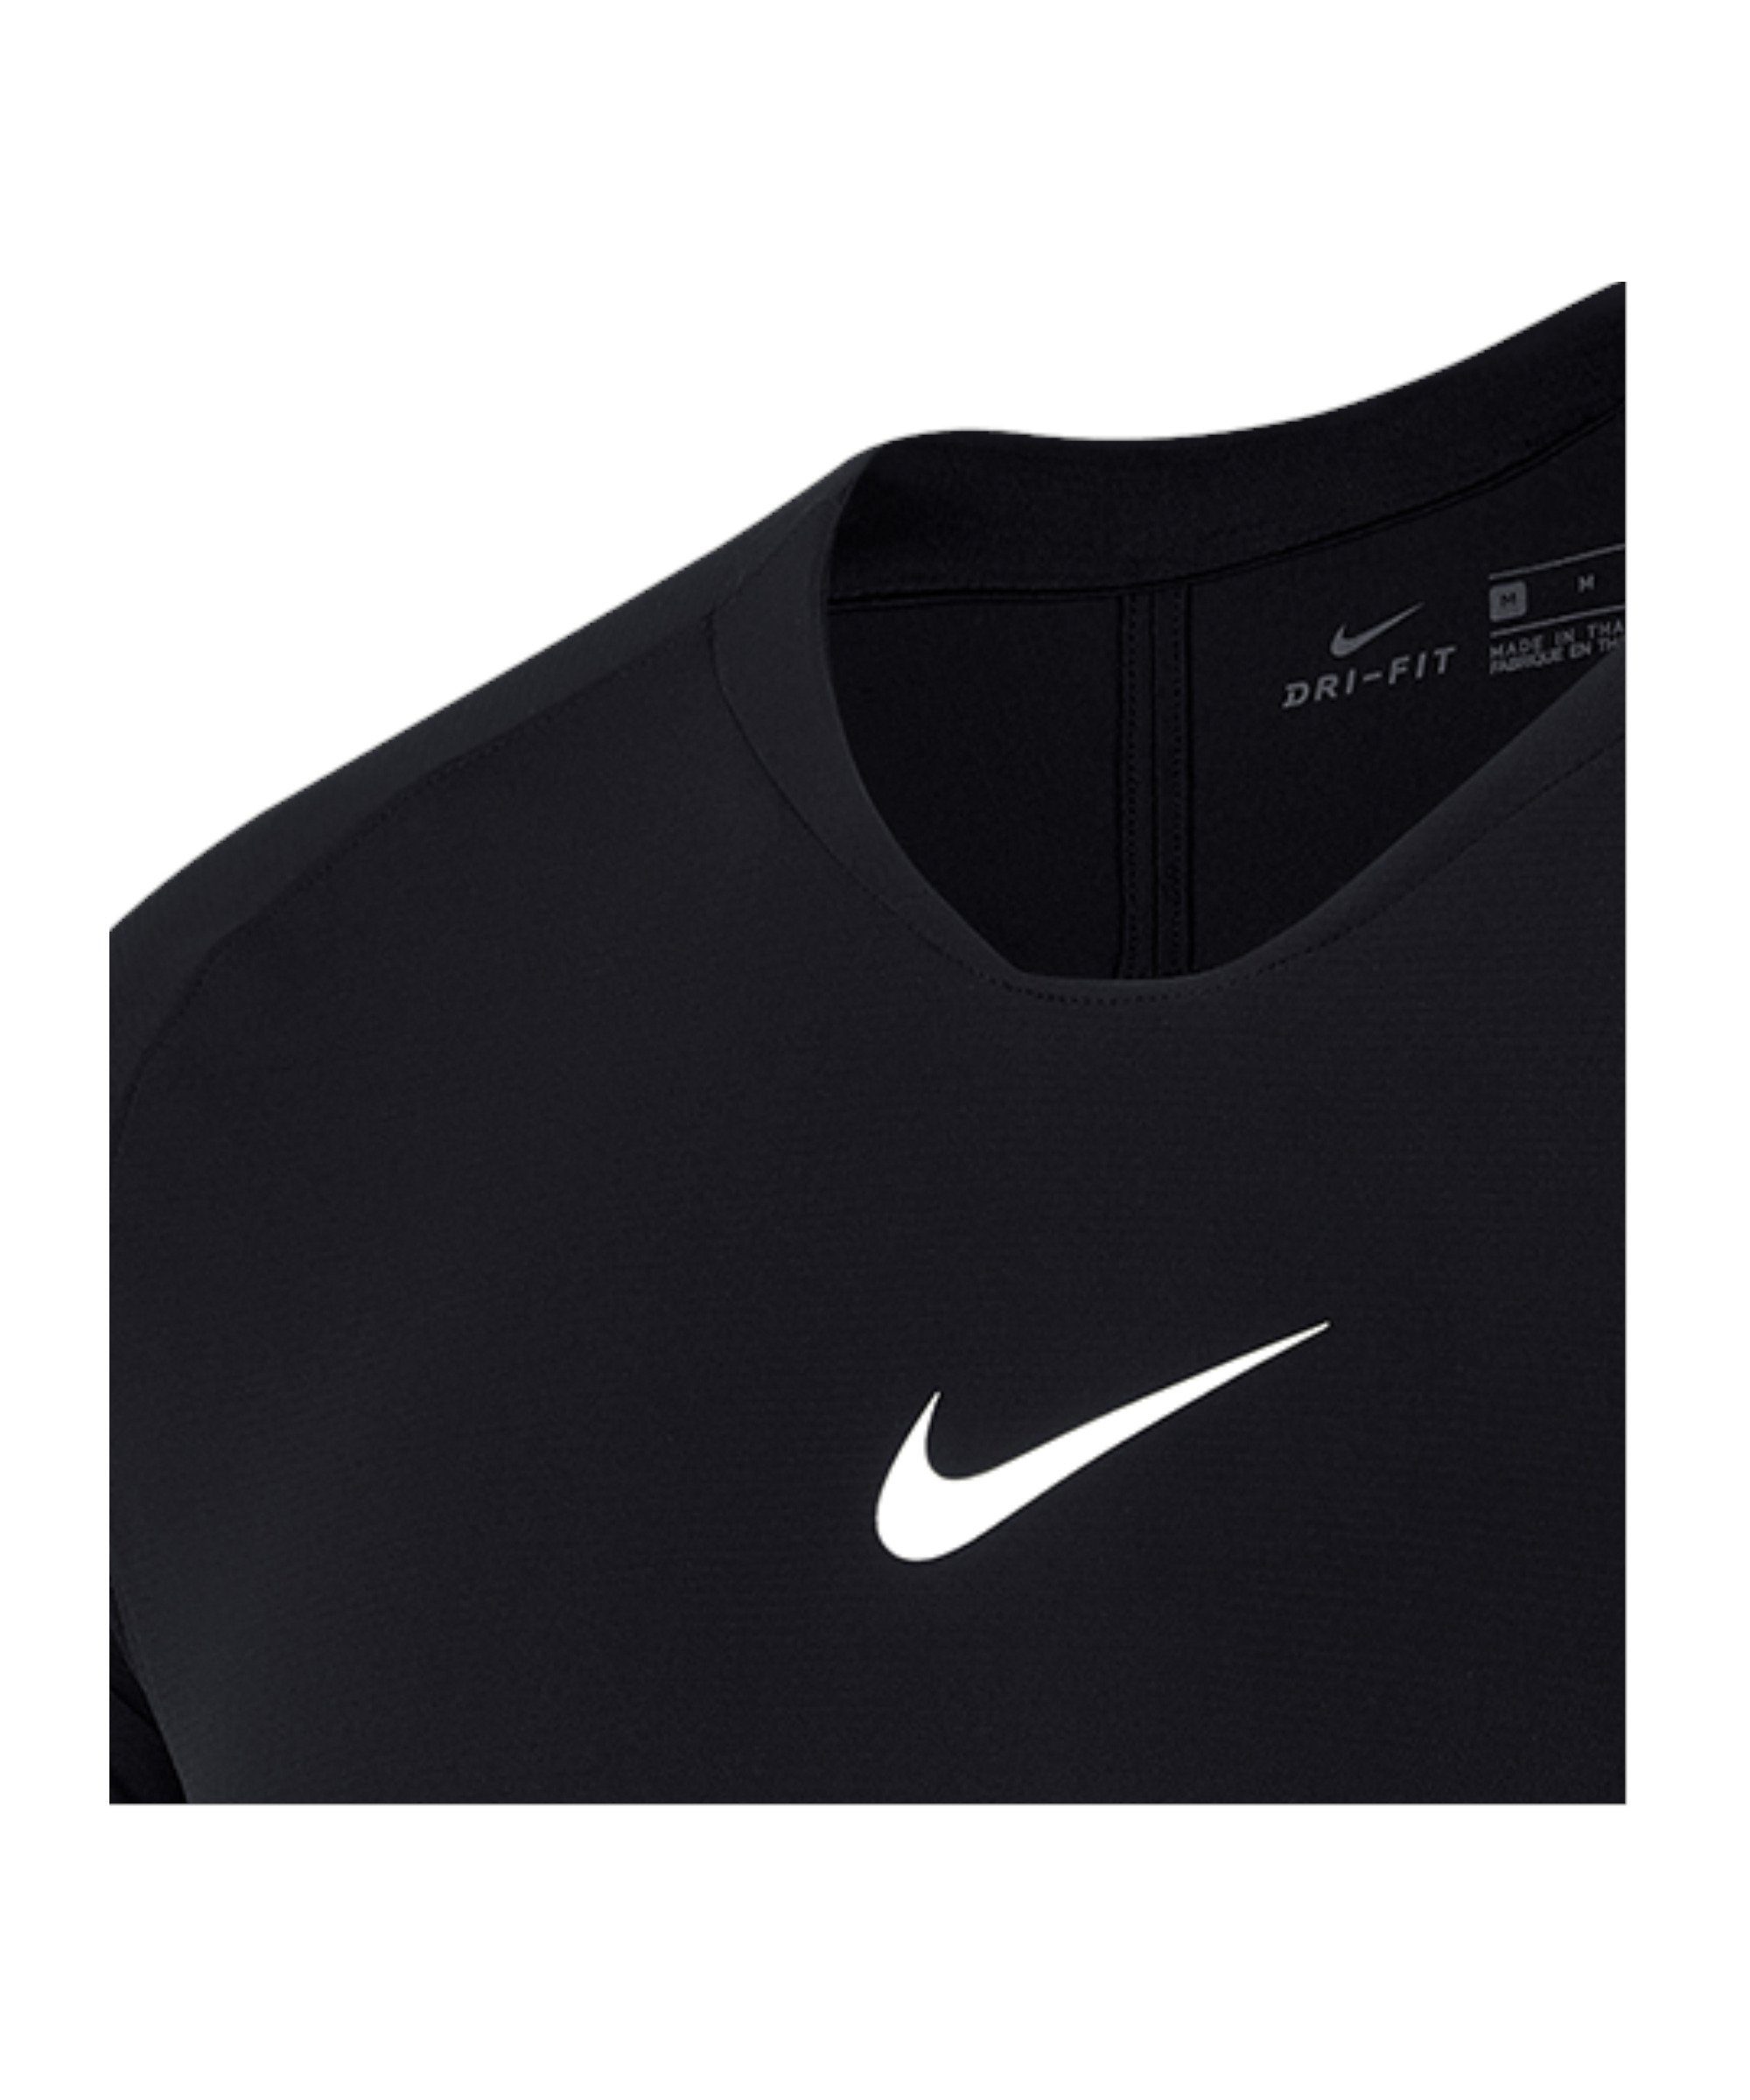 Nike First Park Kids Funktionsshirt schwarzweiss Daumenöffnung Layer Top